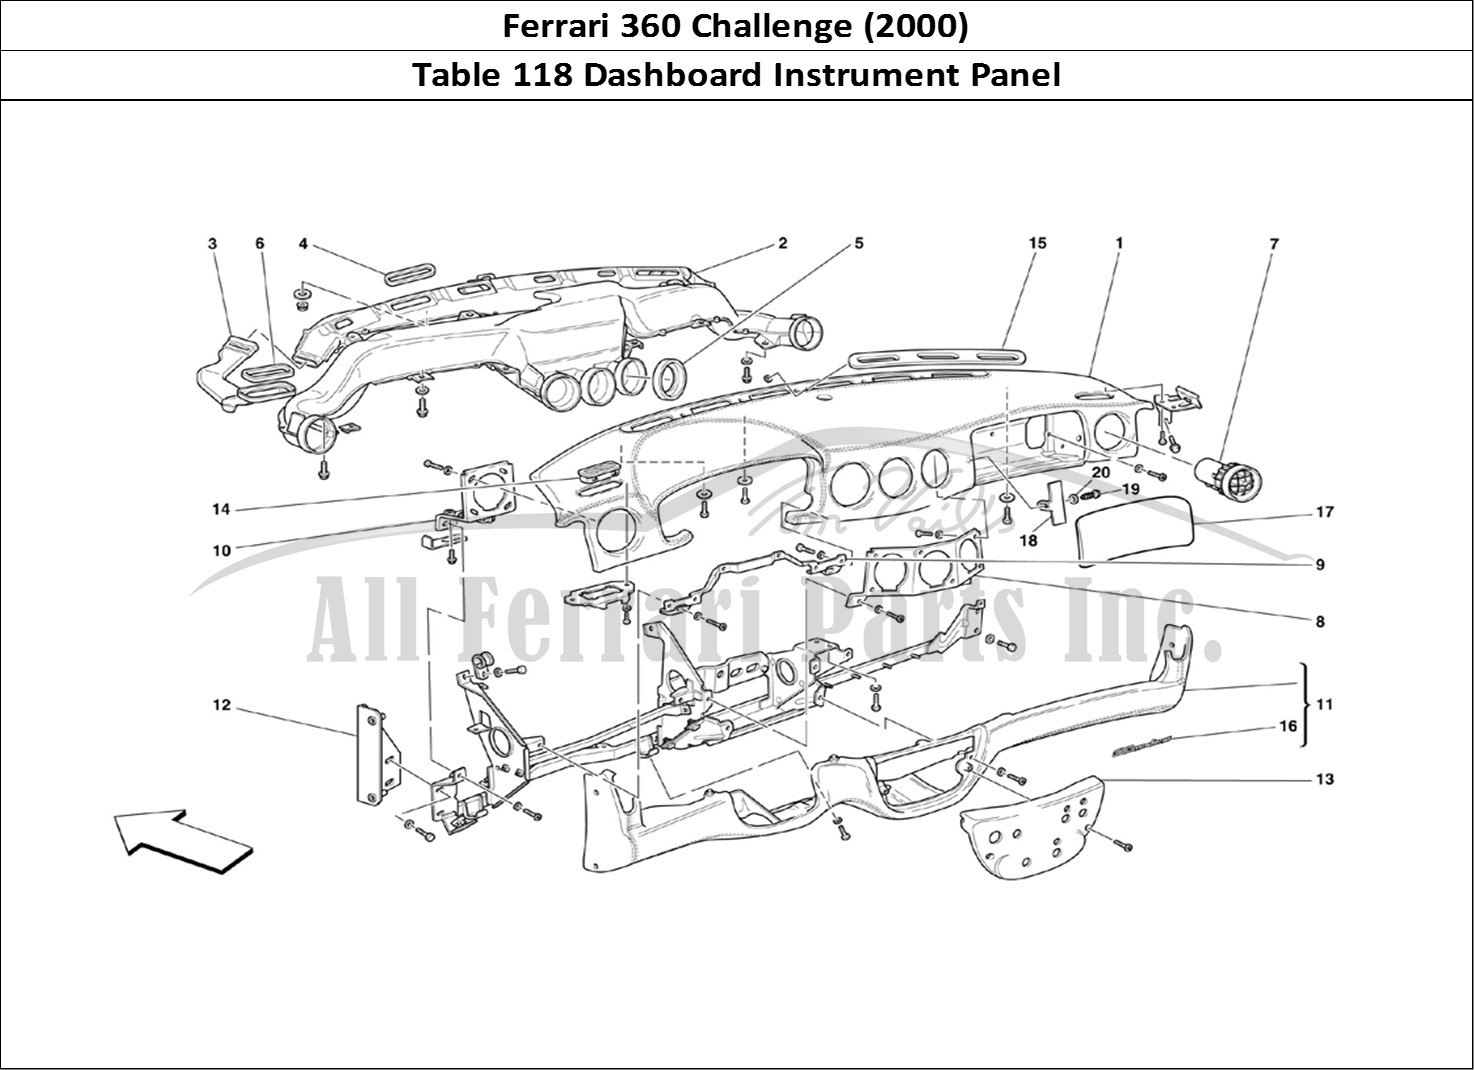 Ferrari Parts Ferrari 360 Challenge (2000) Page 118 Dashboard